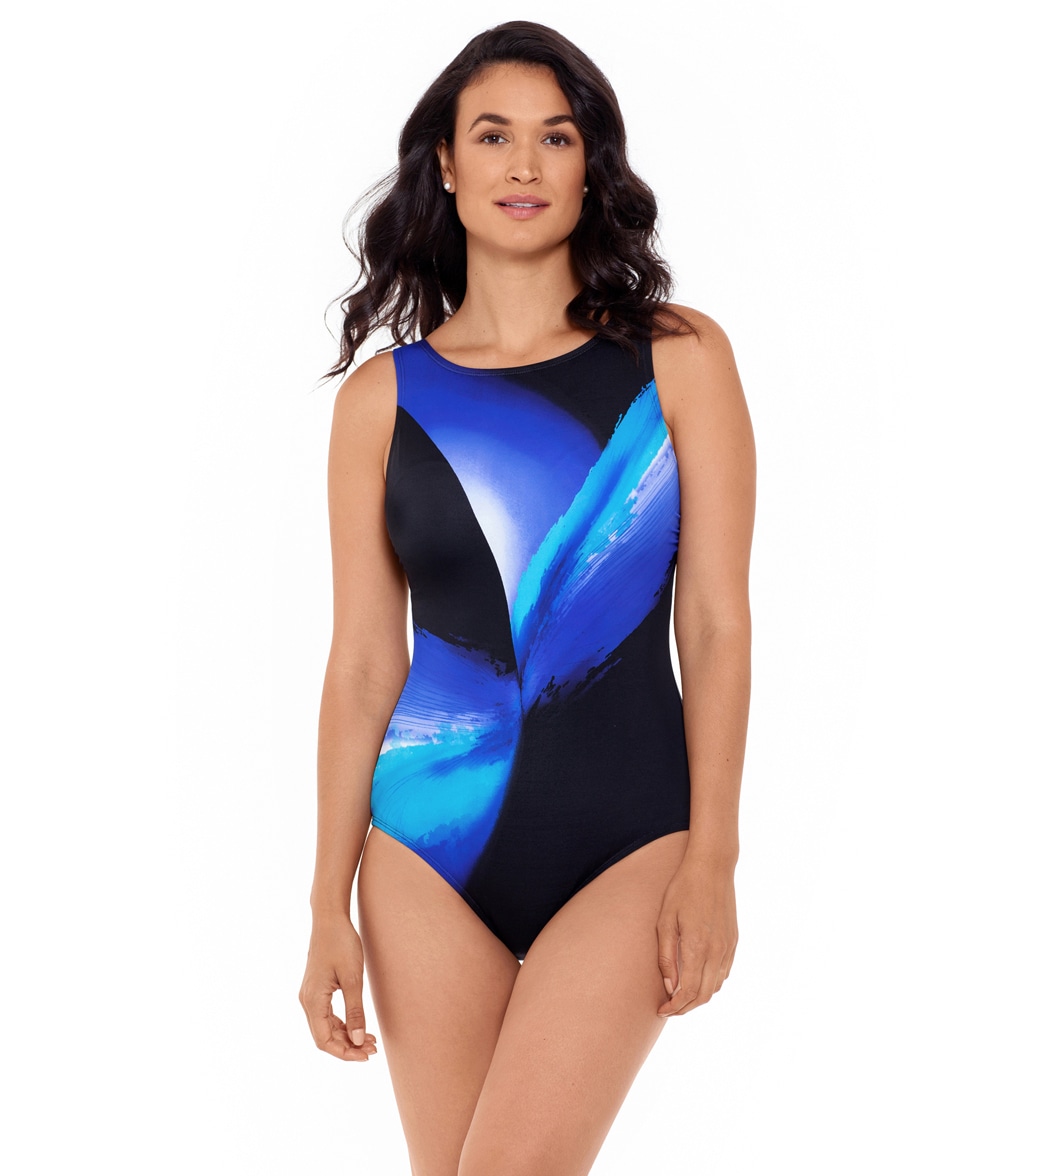 Reebok Women's Aurora Borealis High Neck Chlorine Resistant One Piece Swimsuit - Blue/Black 10 - Swimoutlet.com